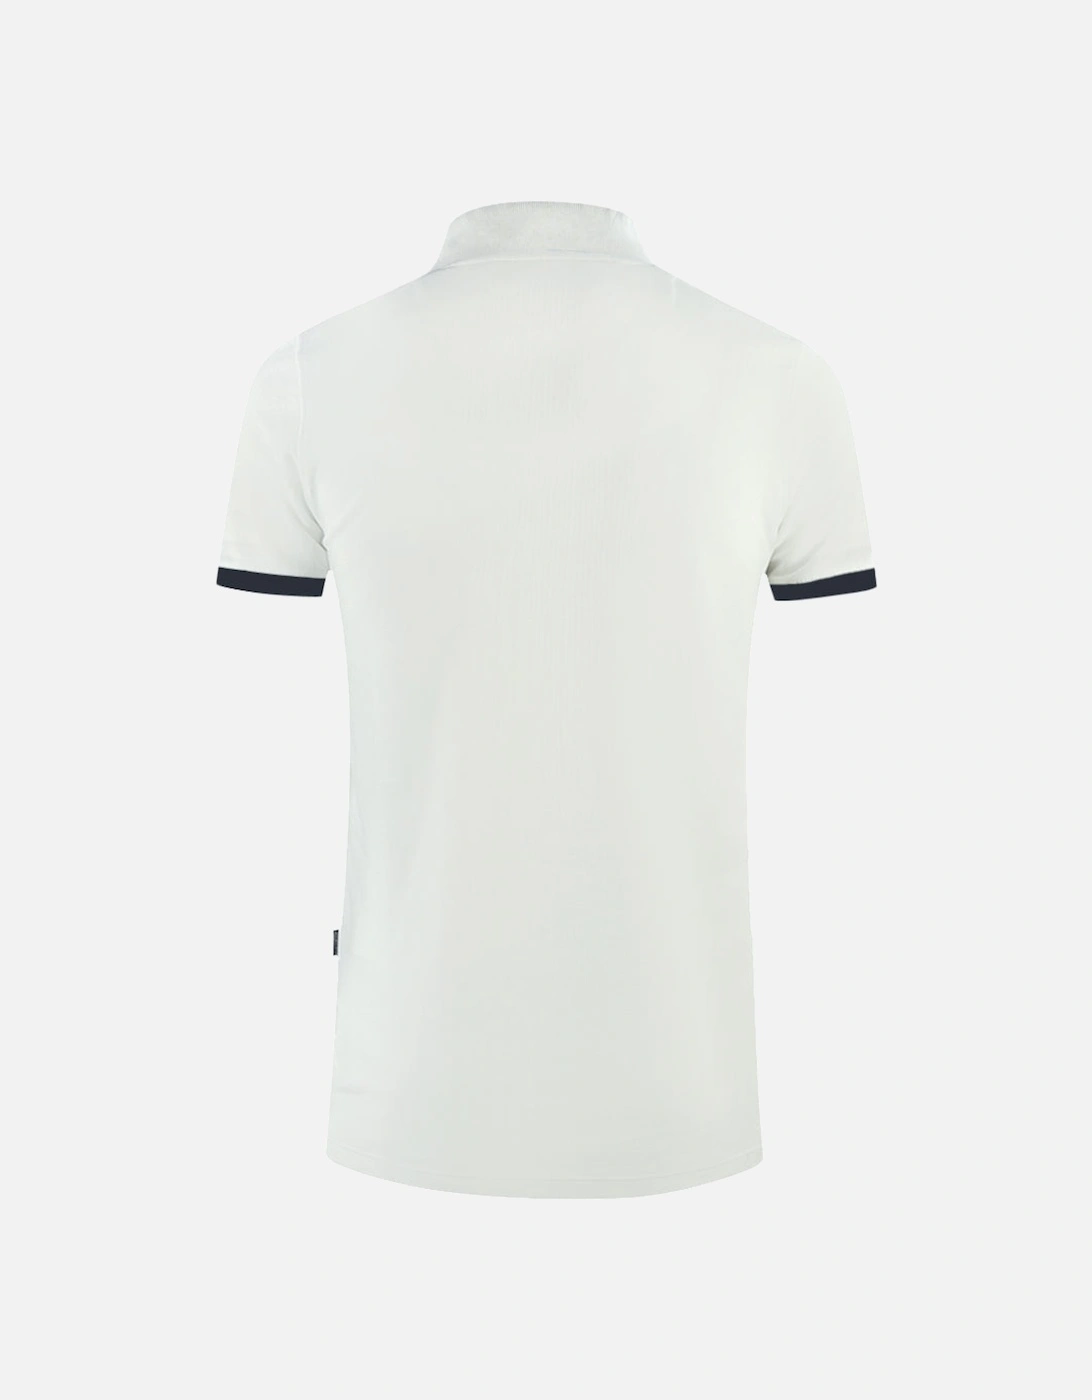 London Aldis White Polo Shirt